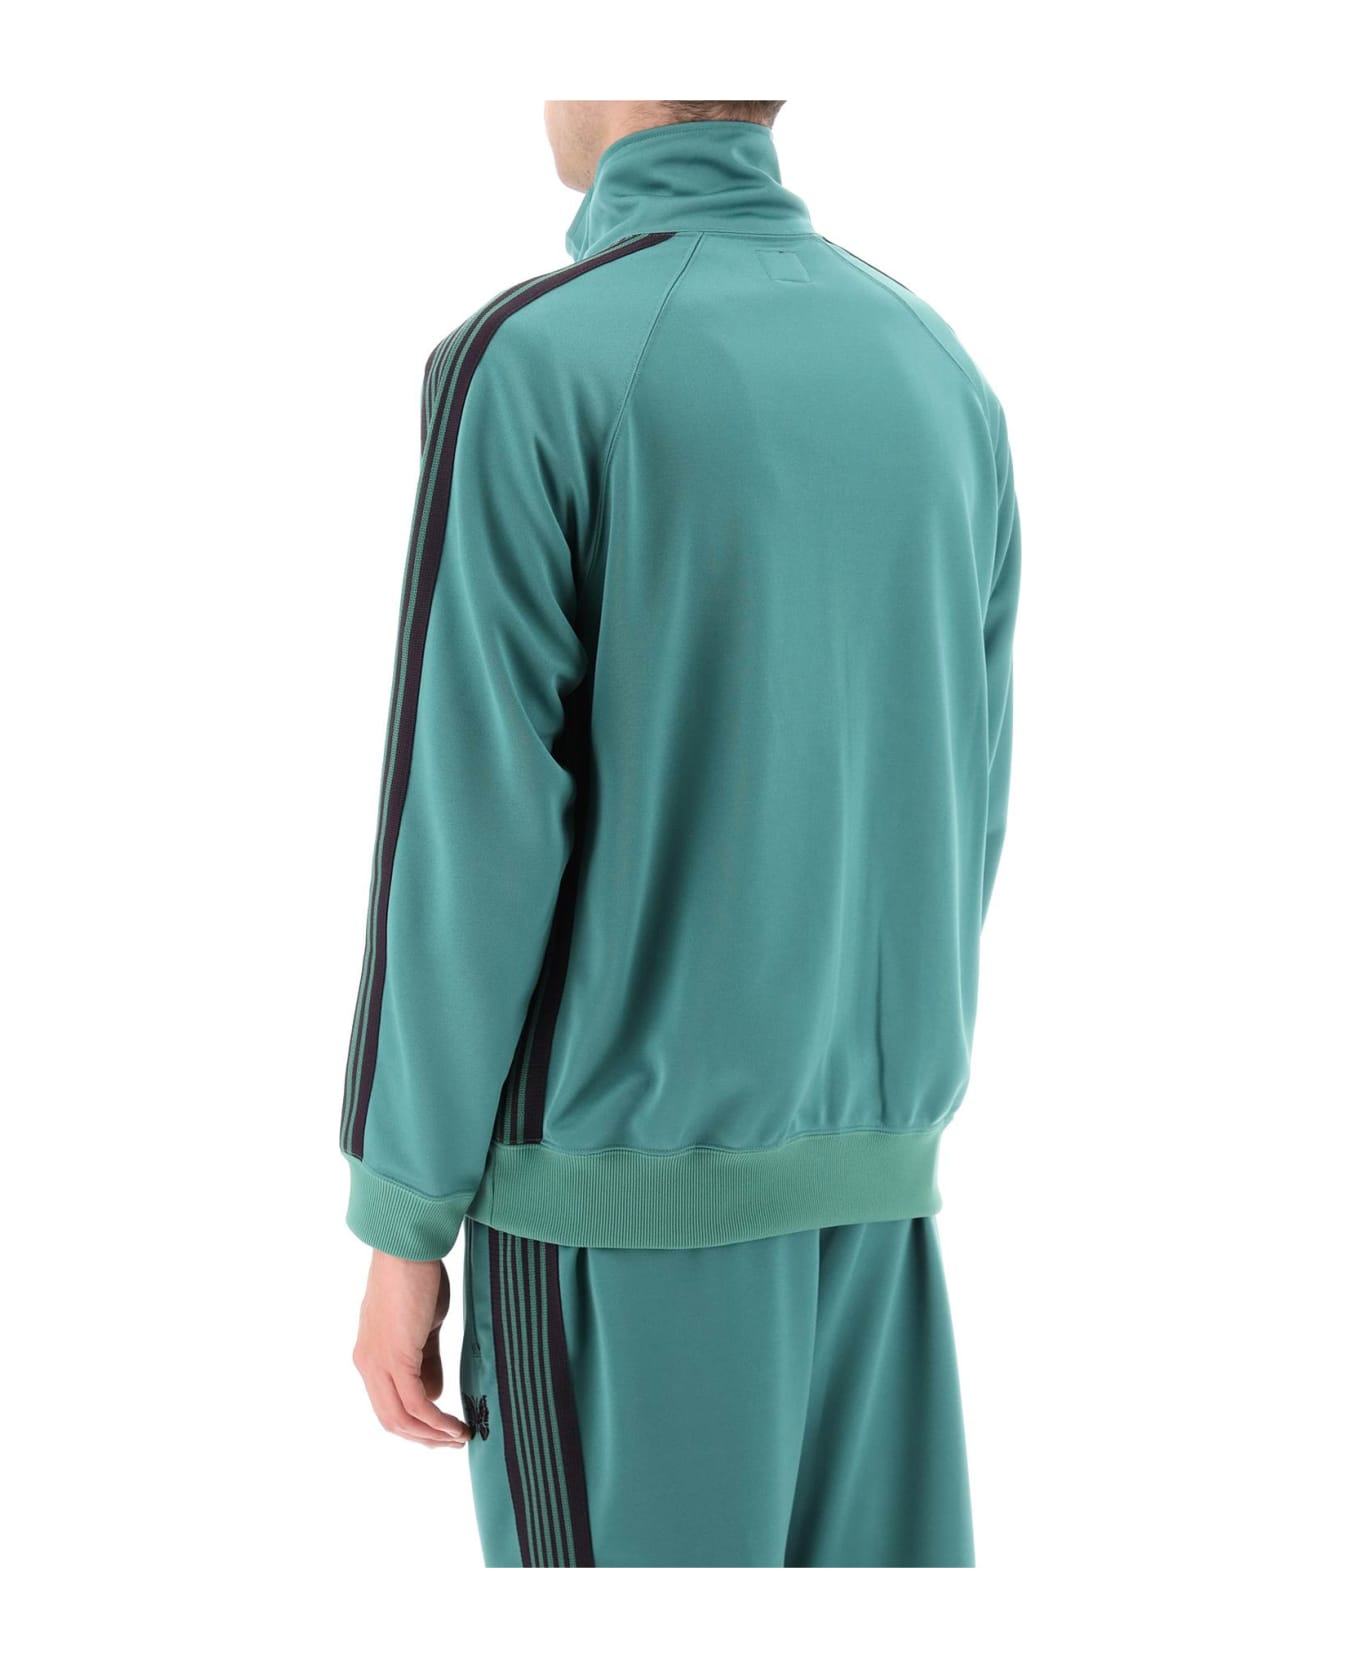 Needles Sweatshirt With Zipper And Contrasting Bands - EMERALD (Green)